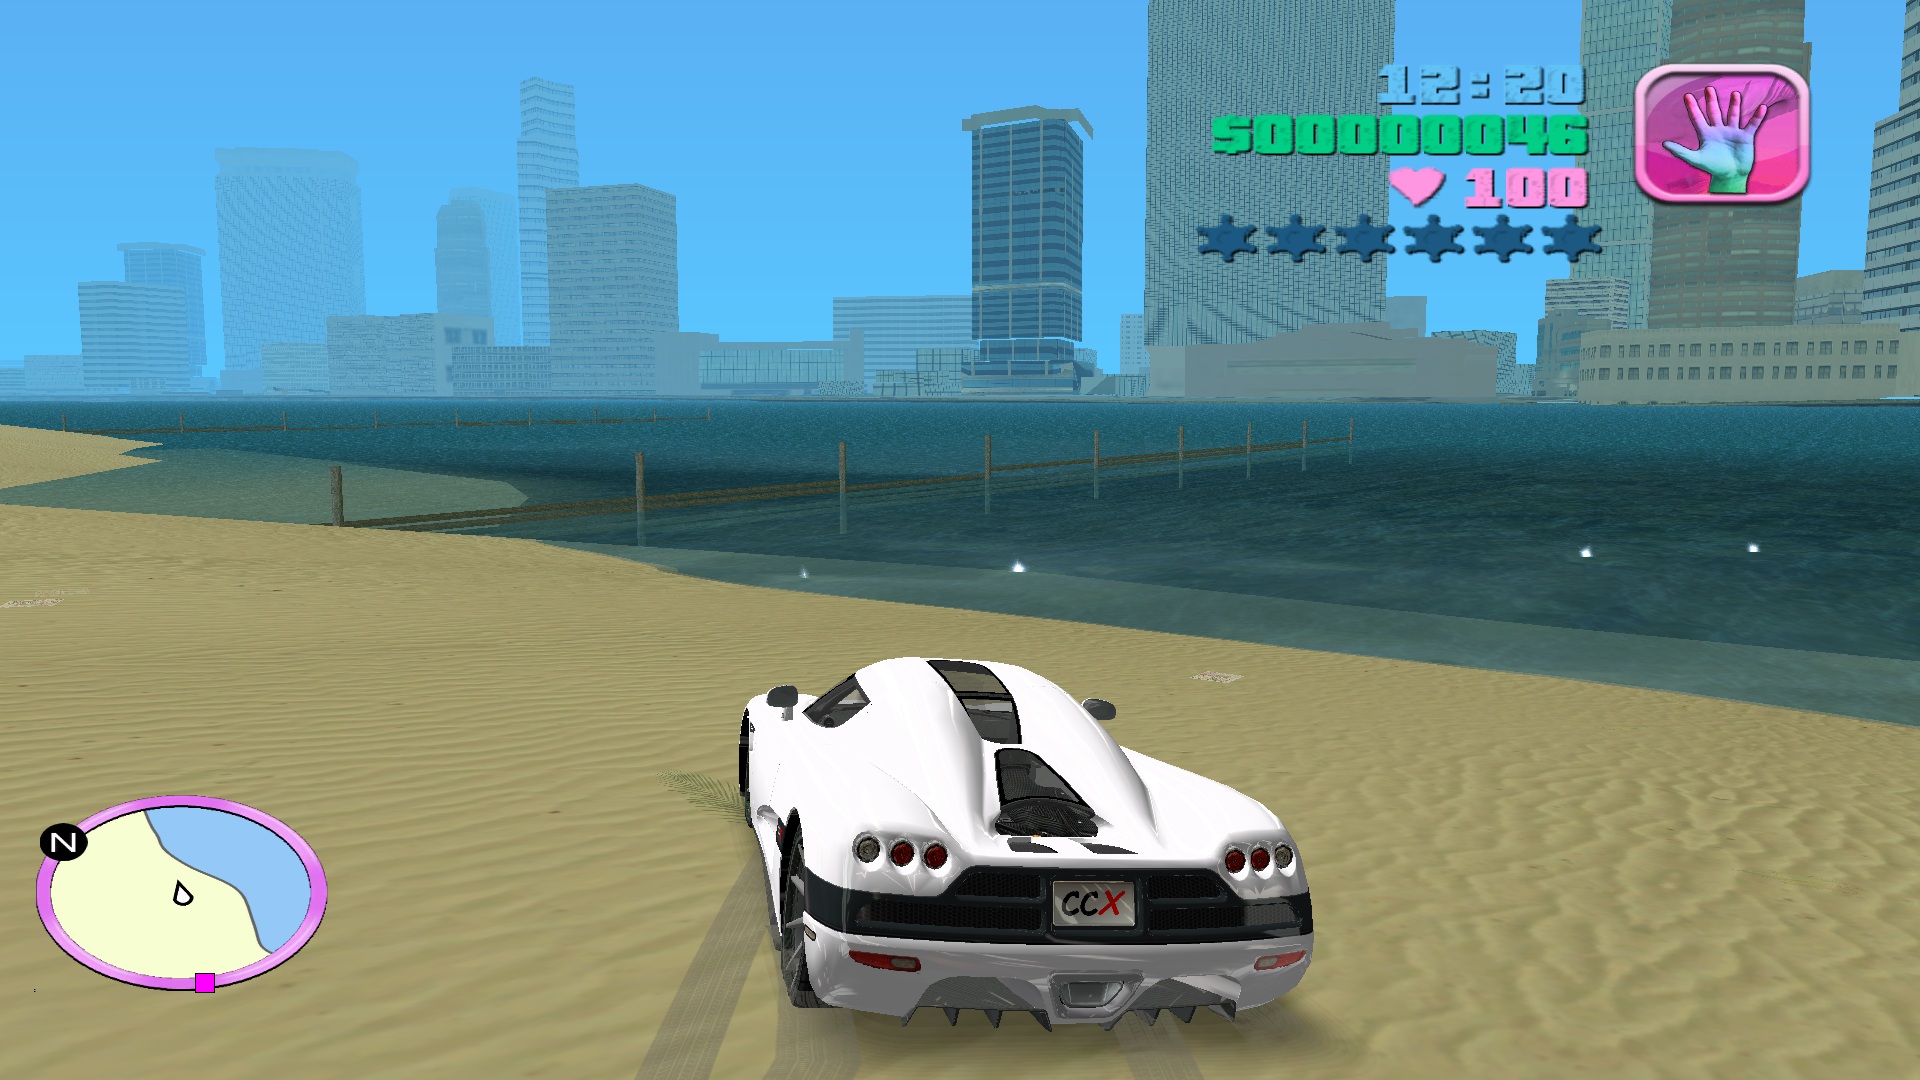 Gta vice city game. Grand Theft auto vice City Deluxe. GTA vice City Final Mod 2012. GTA вай Сити Делюкс. ГТА Вайс Сити 2003.